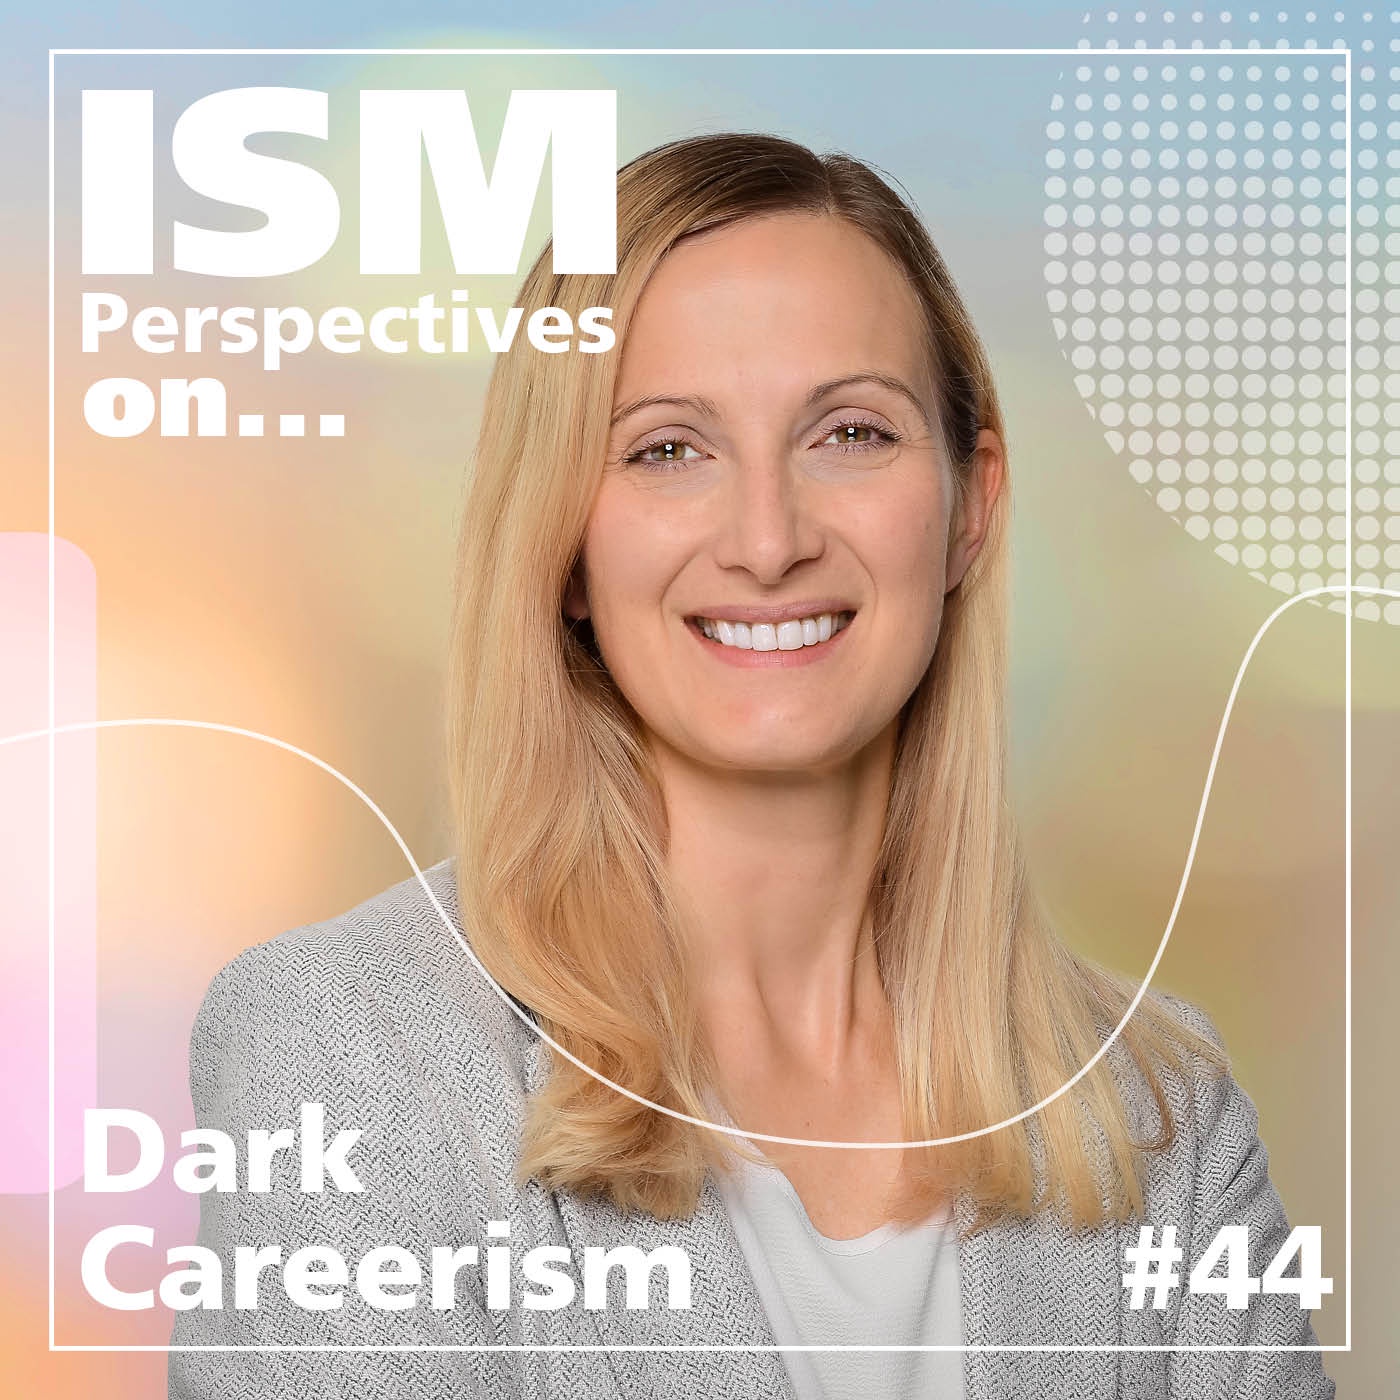 Perspectives on: Dark Careerism